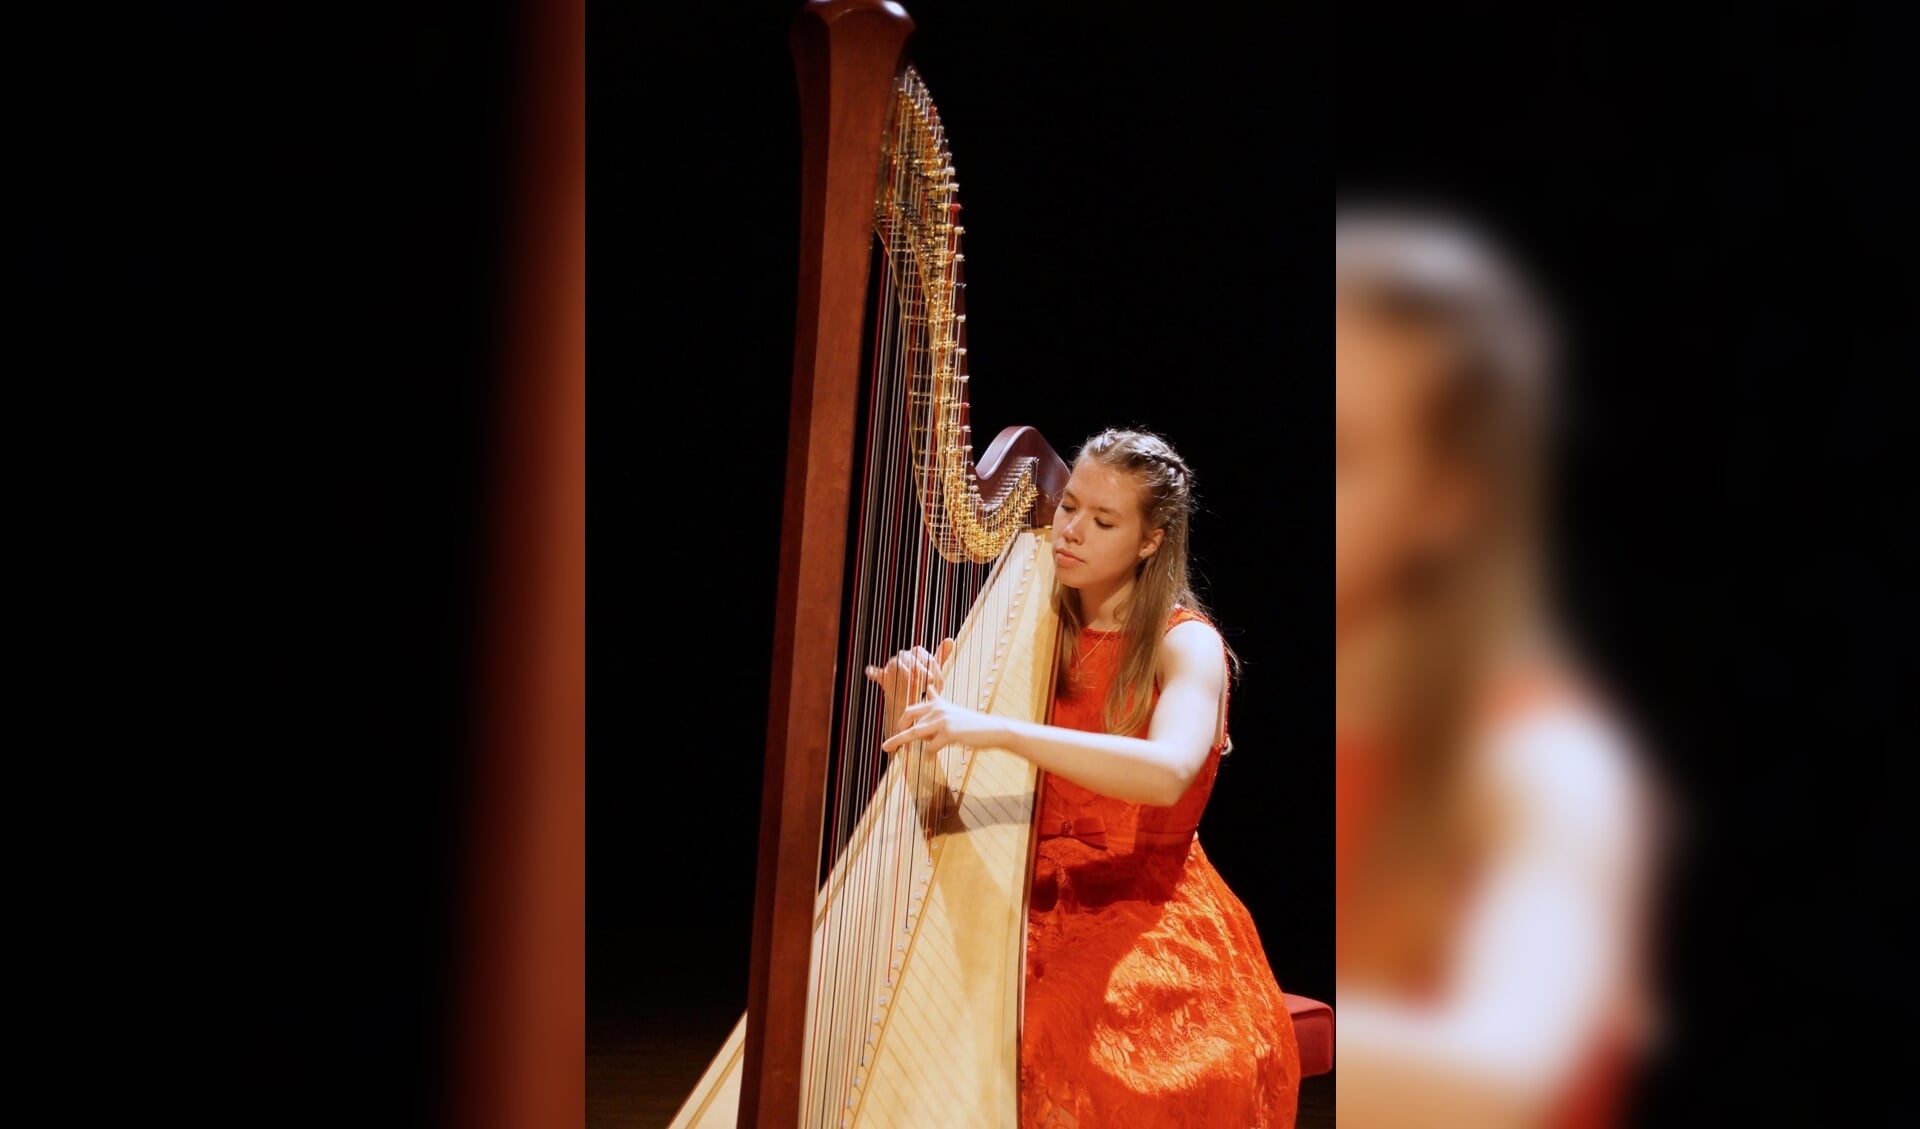 Harpiste en zangeres Kyra Frimout 